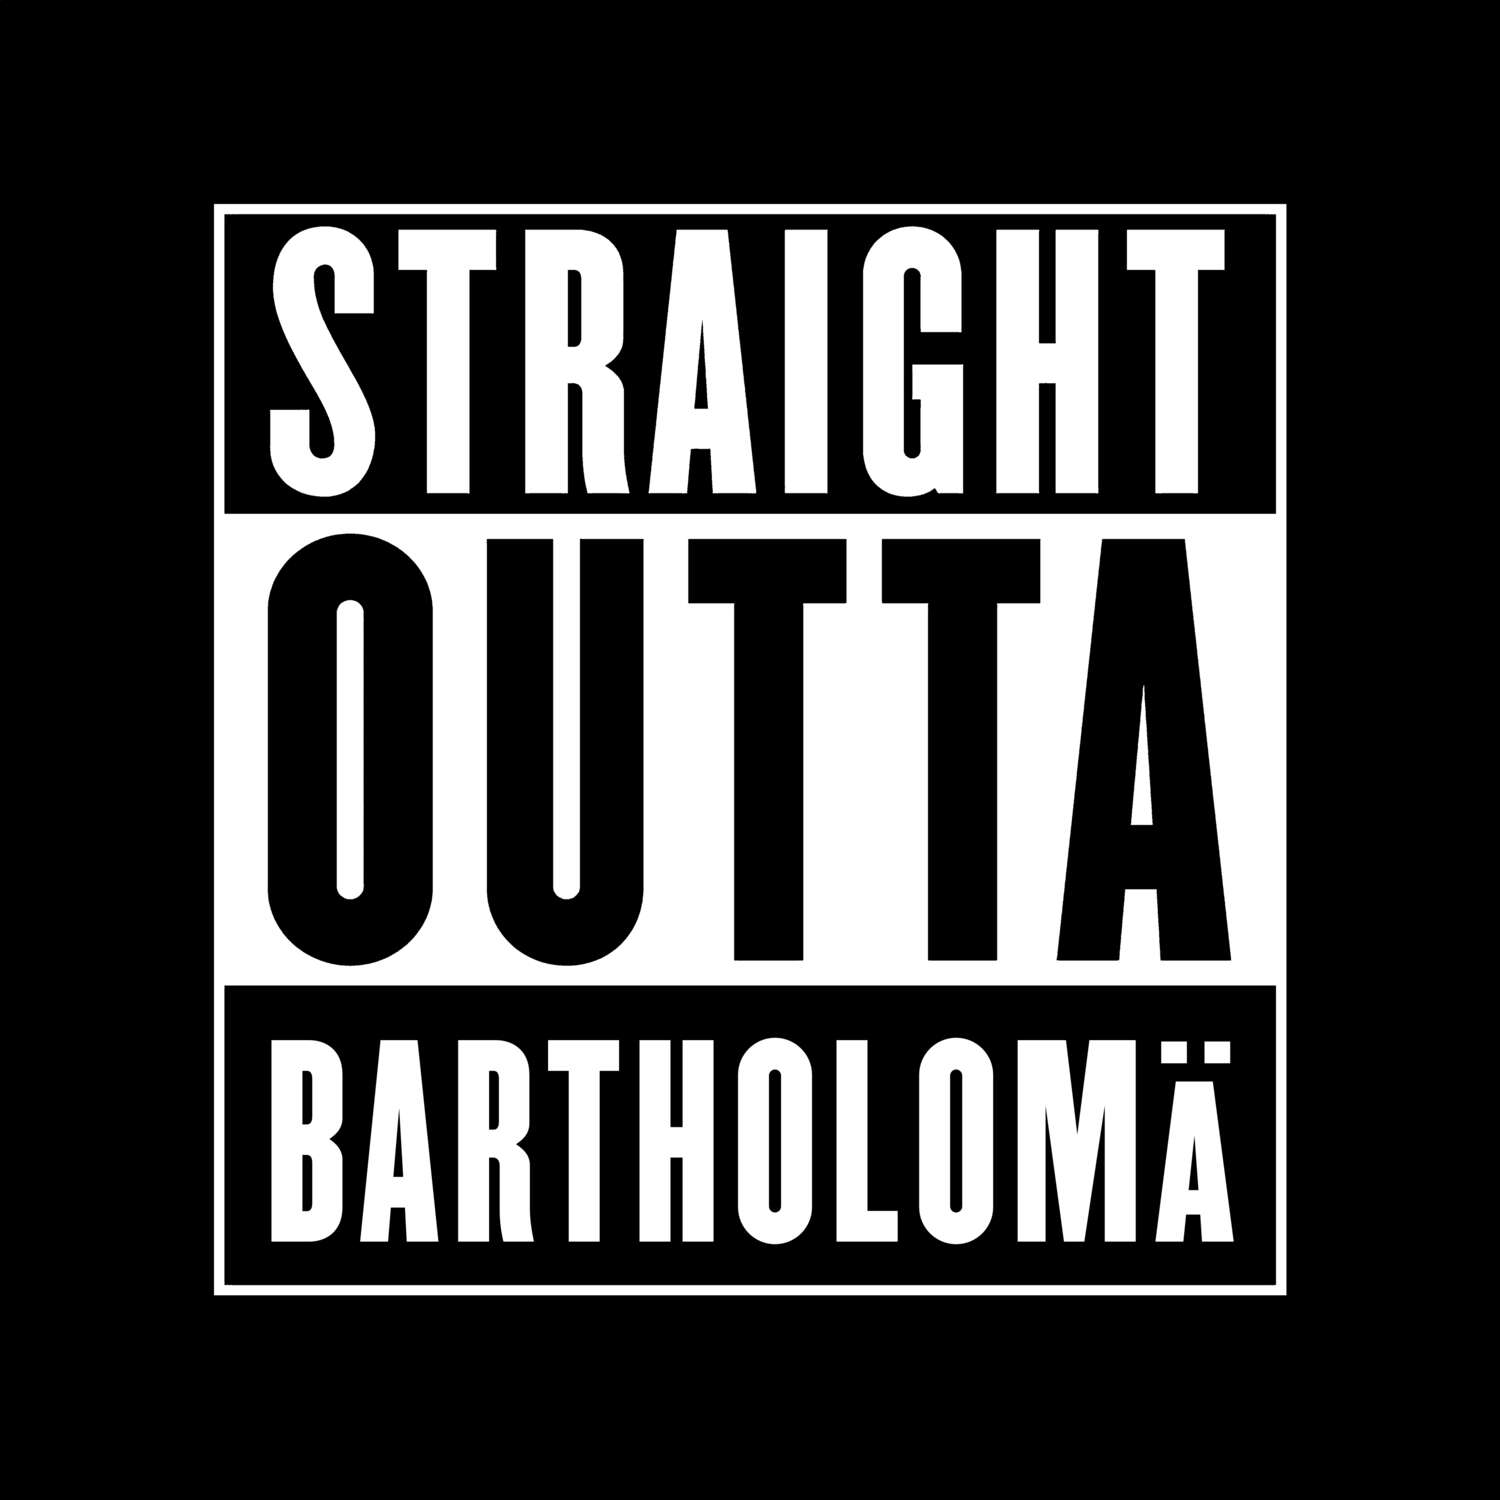 Bartholomä T-Shirt »Straight Outta«